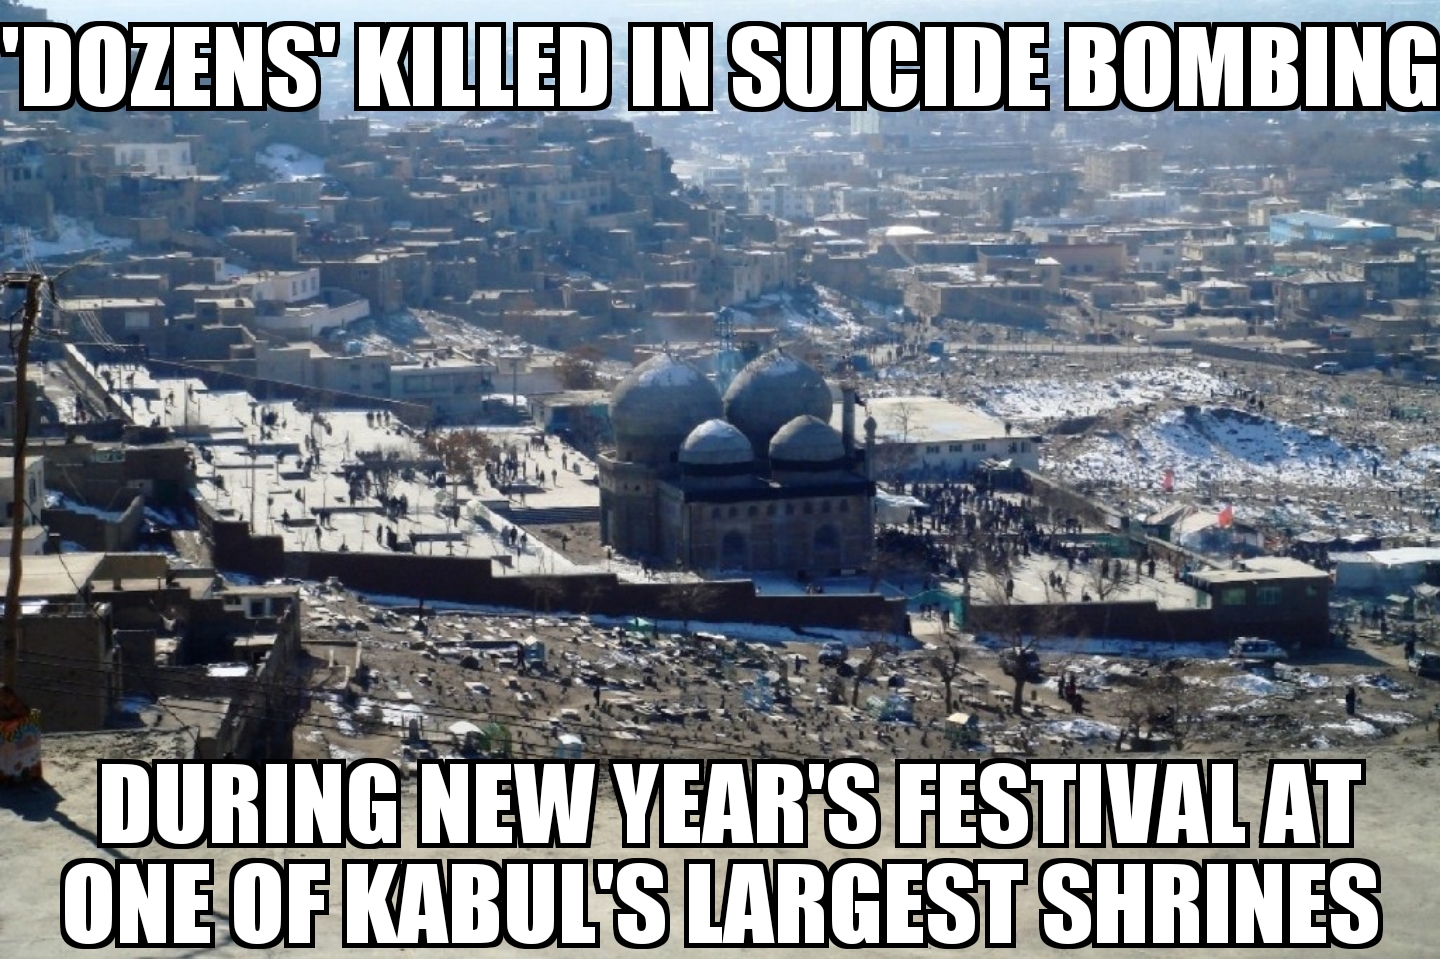 Kabul Sakhi shrine bombing